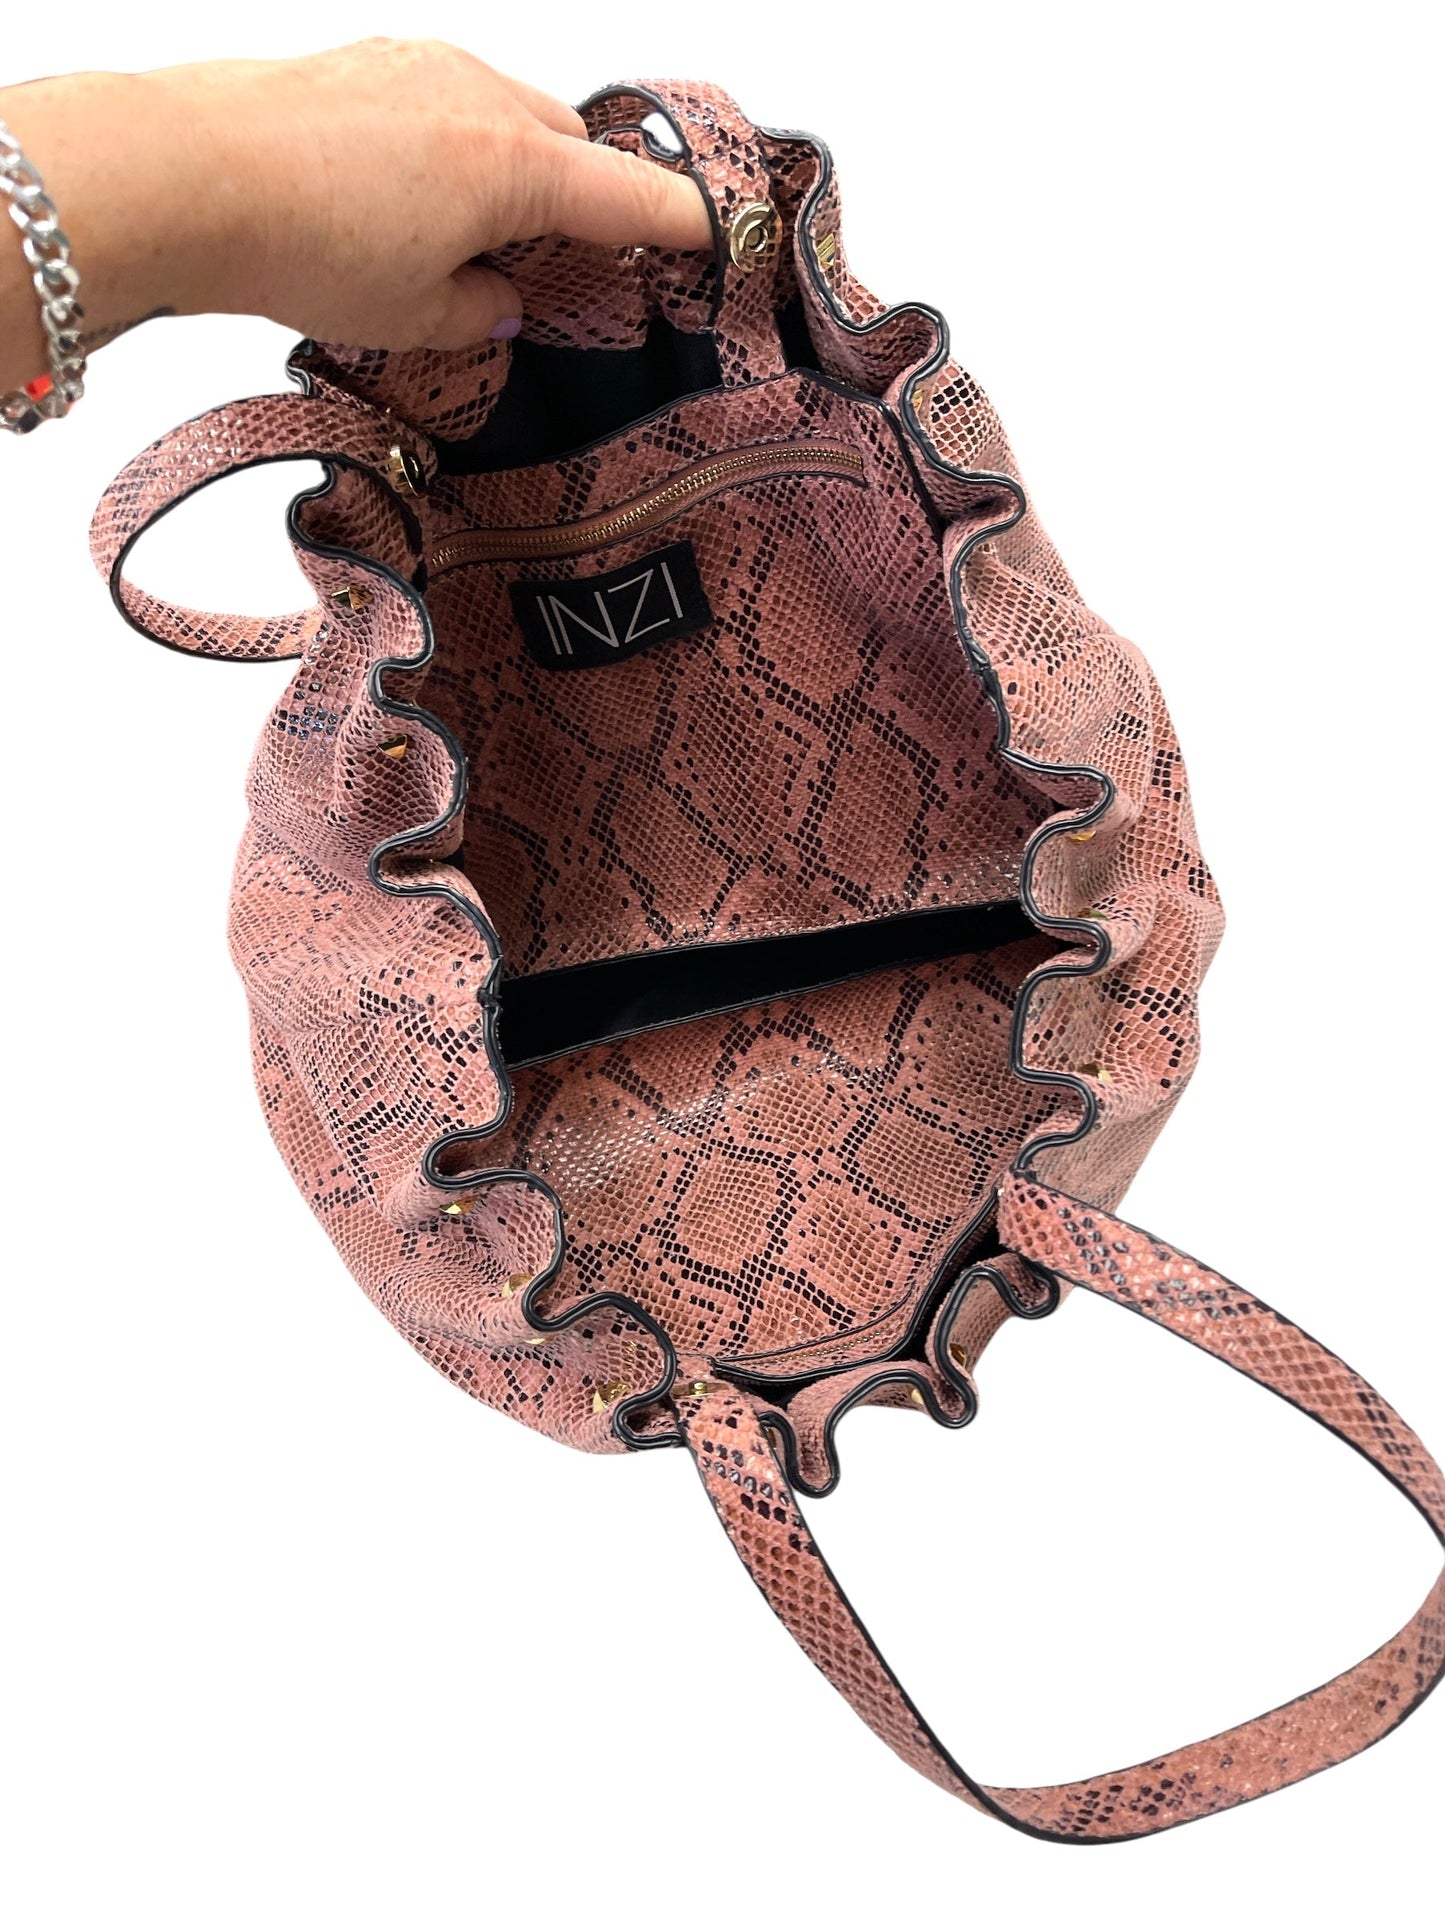 Handbag Designer By INZI  Size: Large